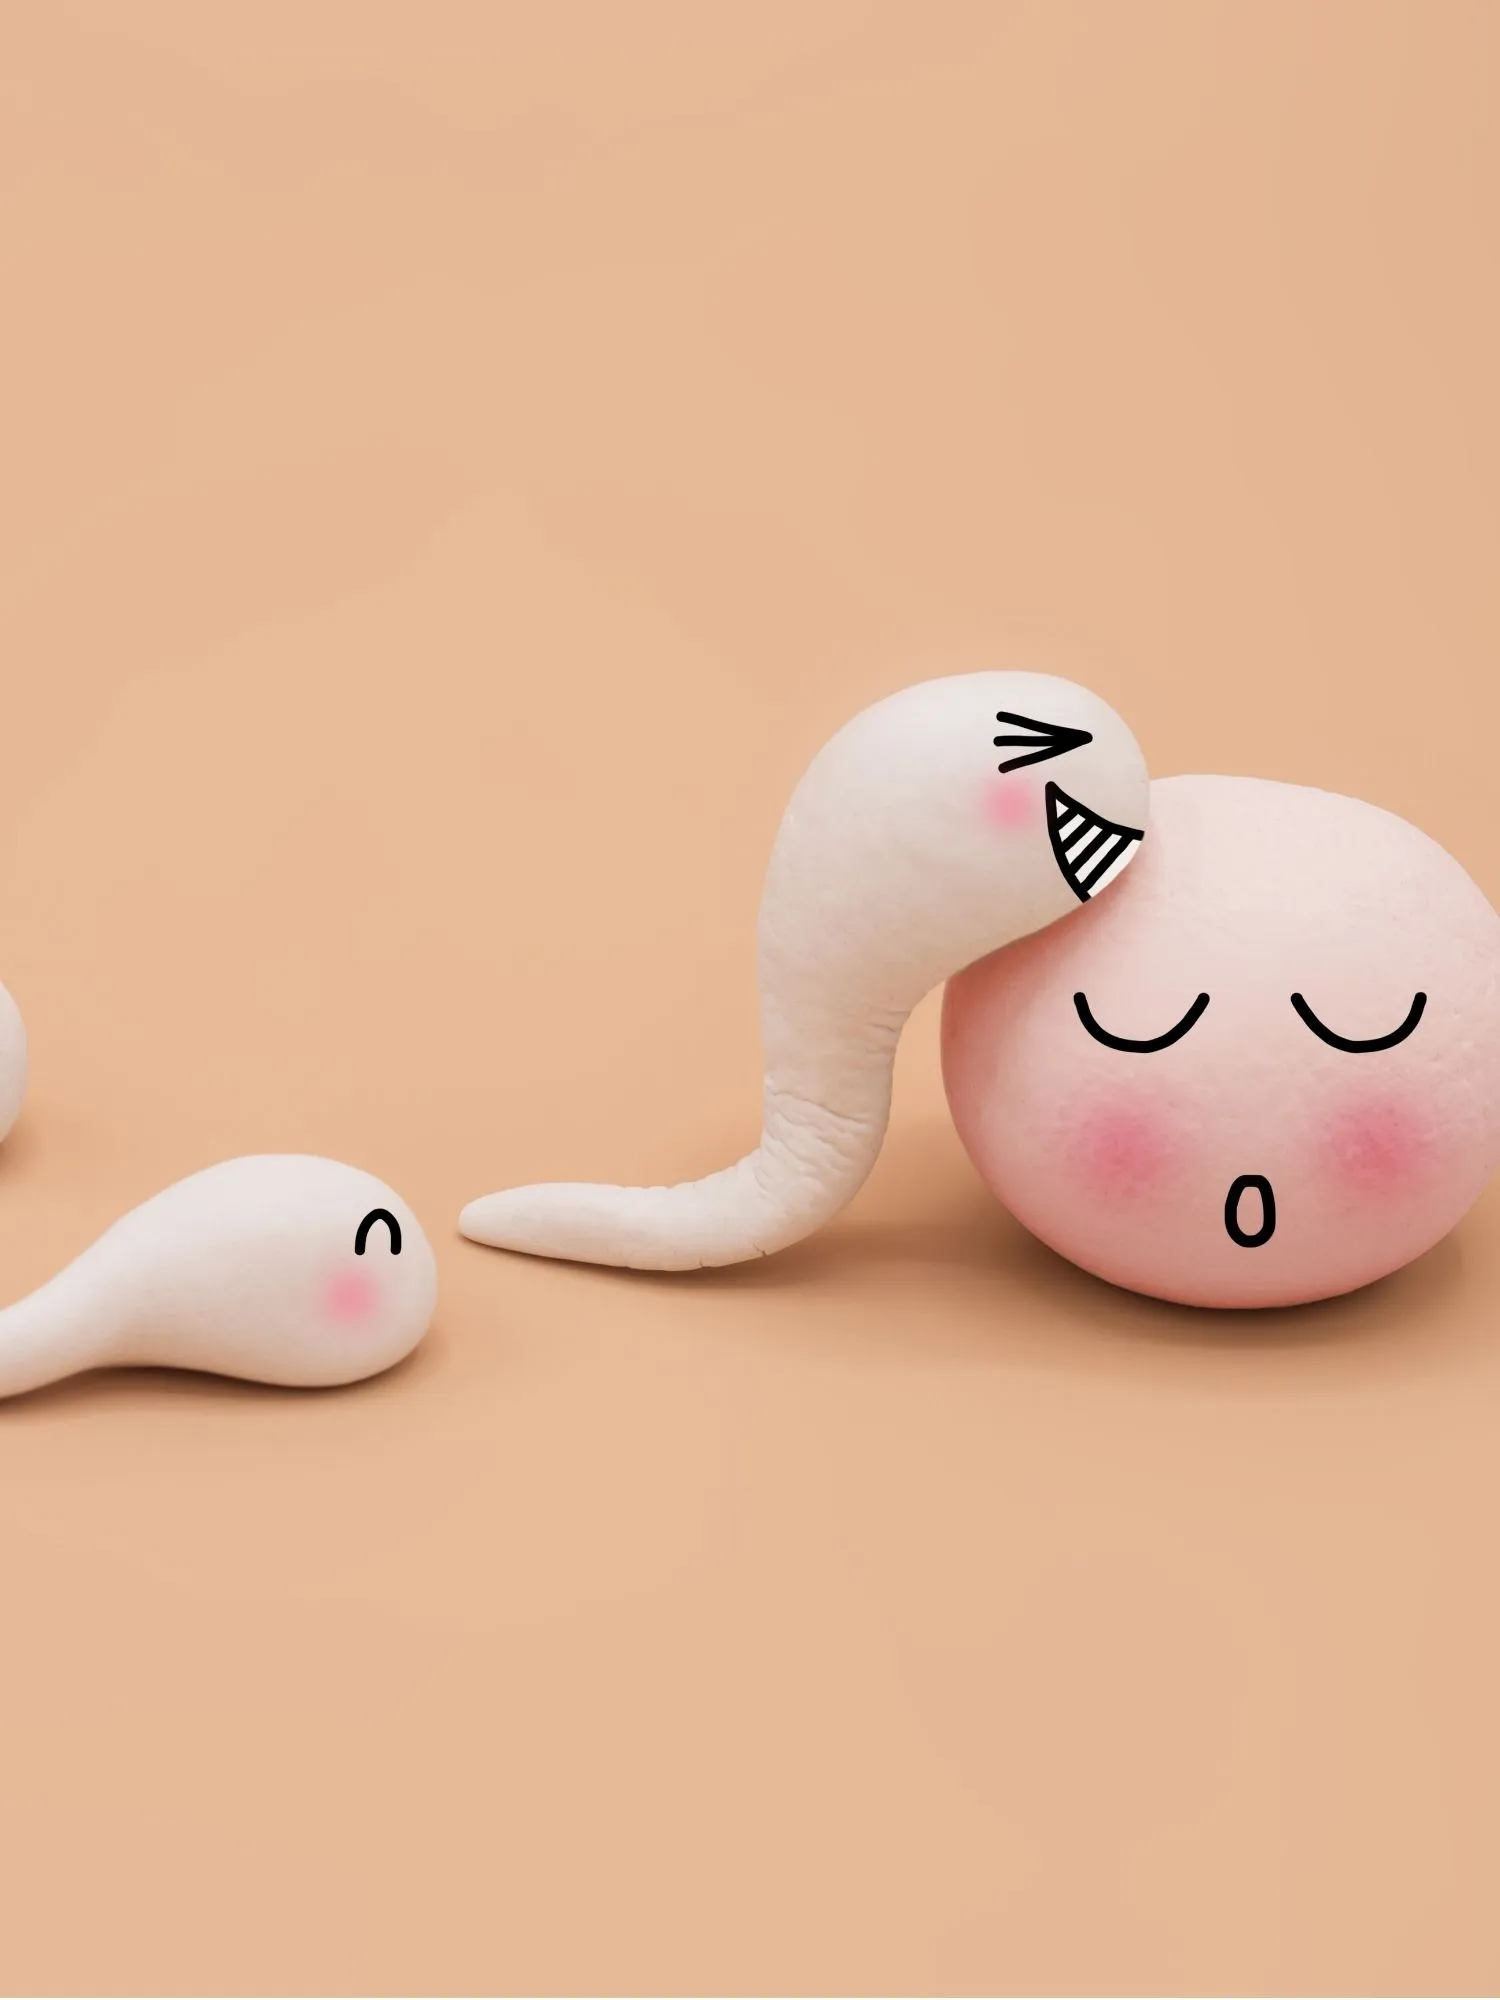 Fertility Cartoon - white sperm and egg meeting, one round egg with 2 sperm, one sperm climbing onto the egg